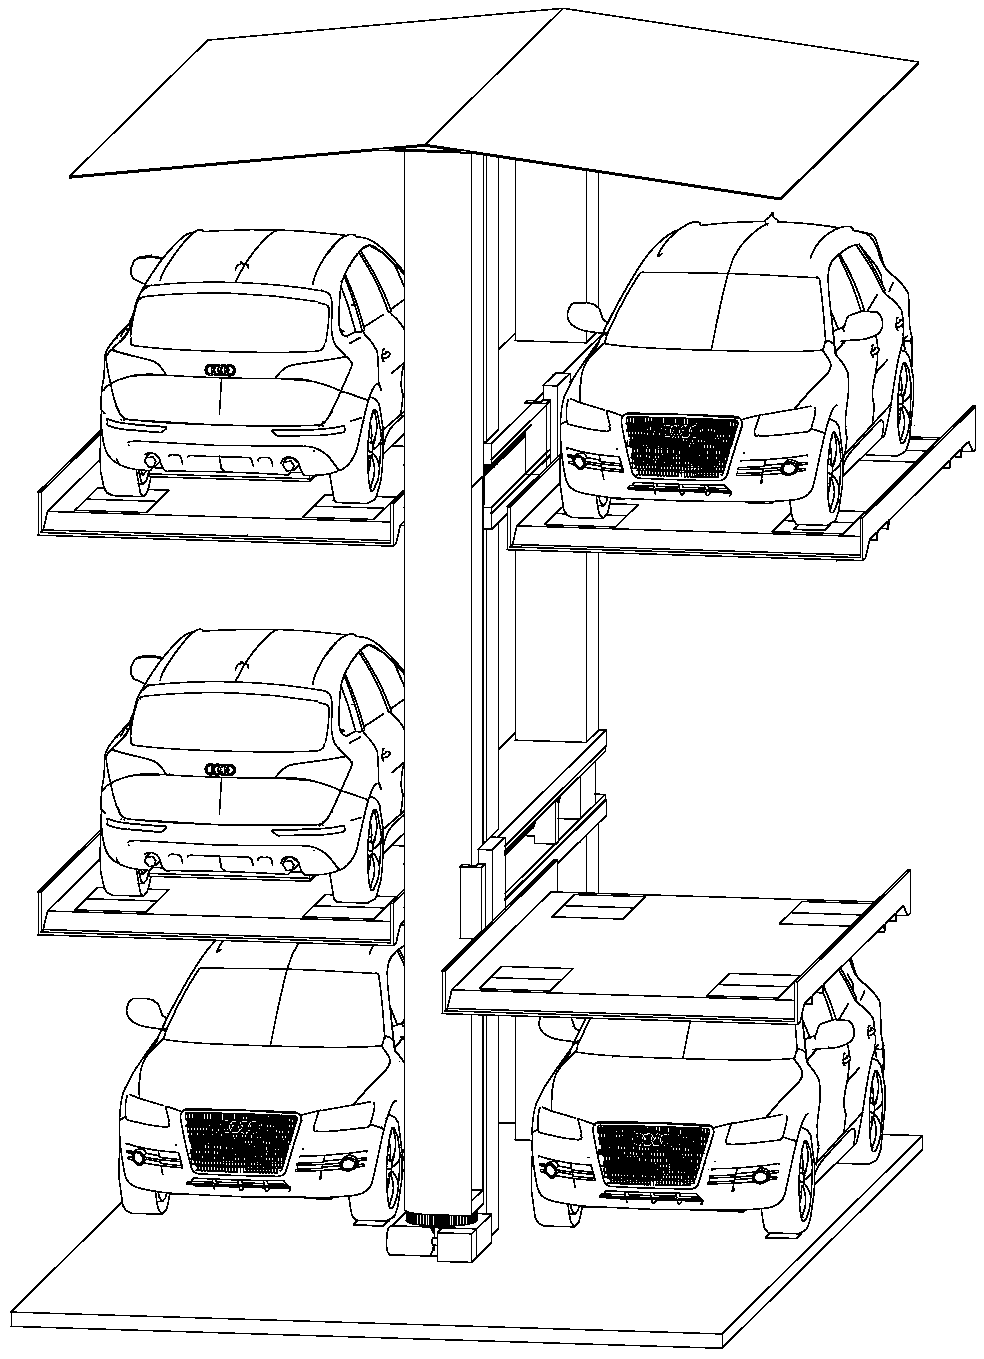 Multi-layer parking platform